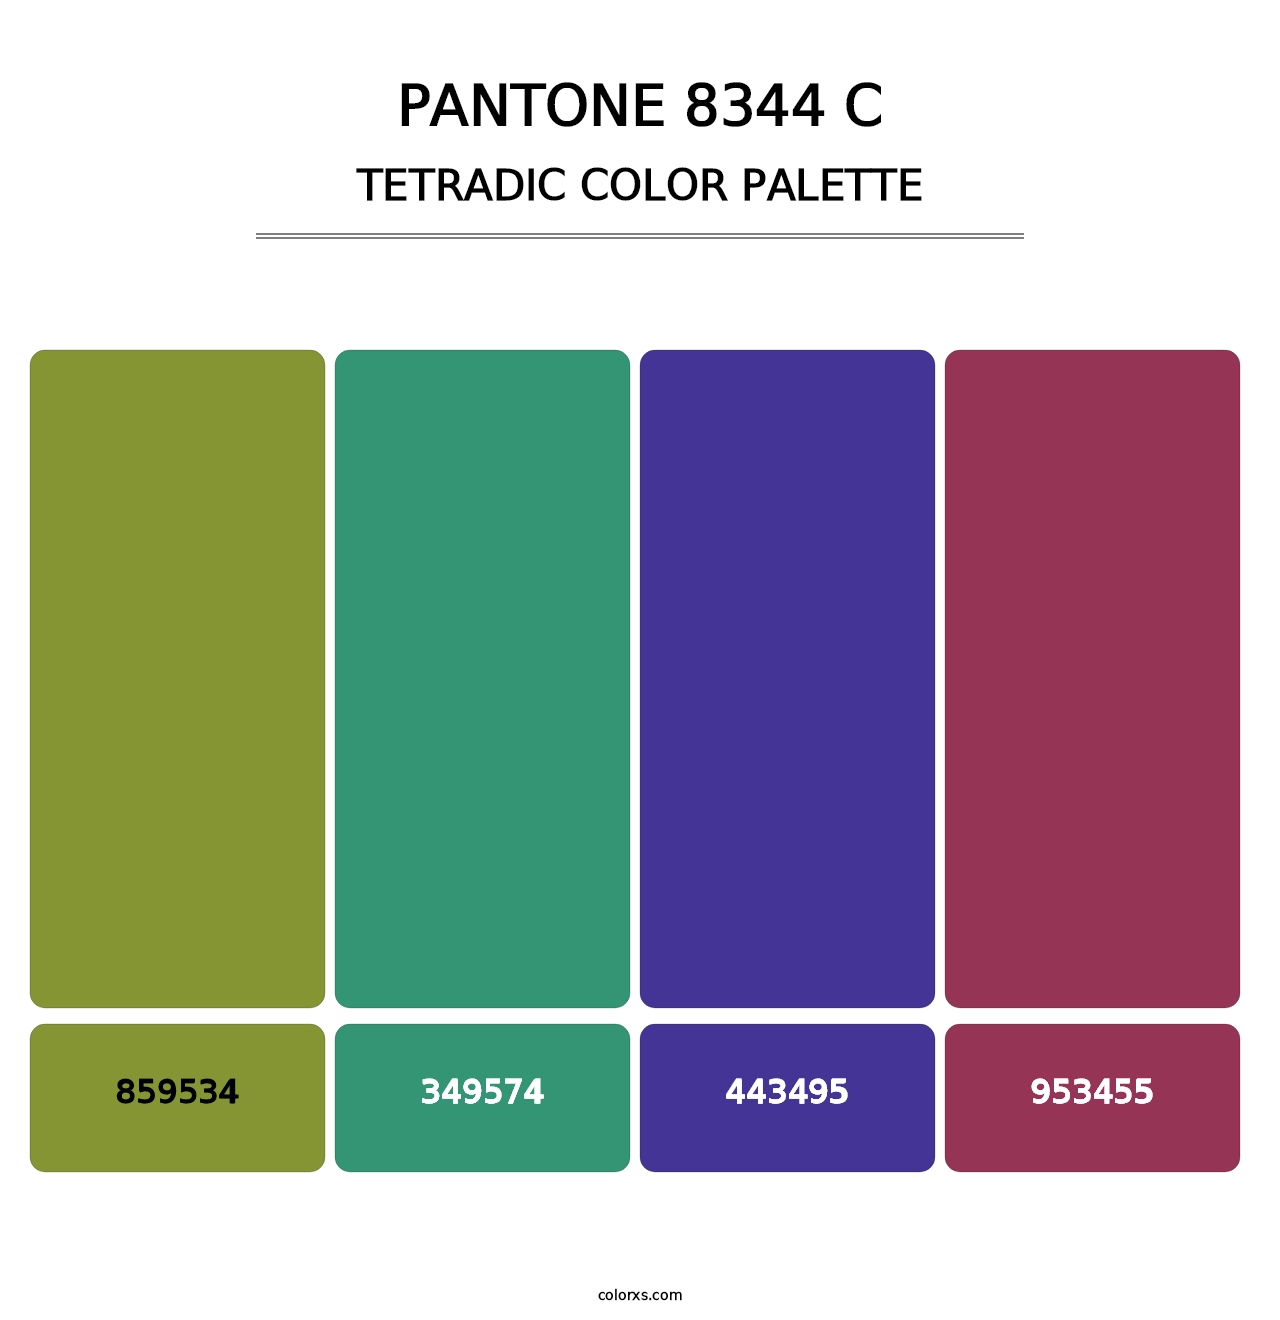 PANTONE 8344 C - Tetradic Color Palette